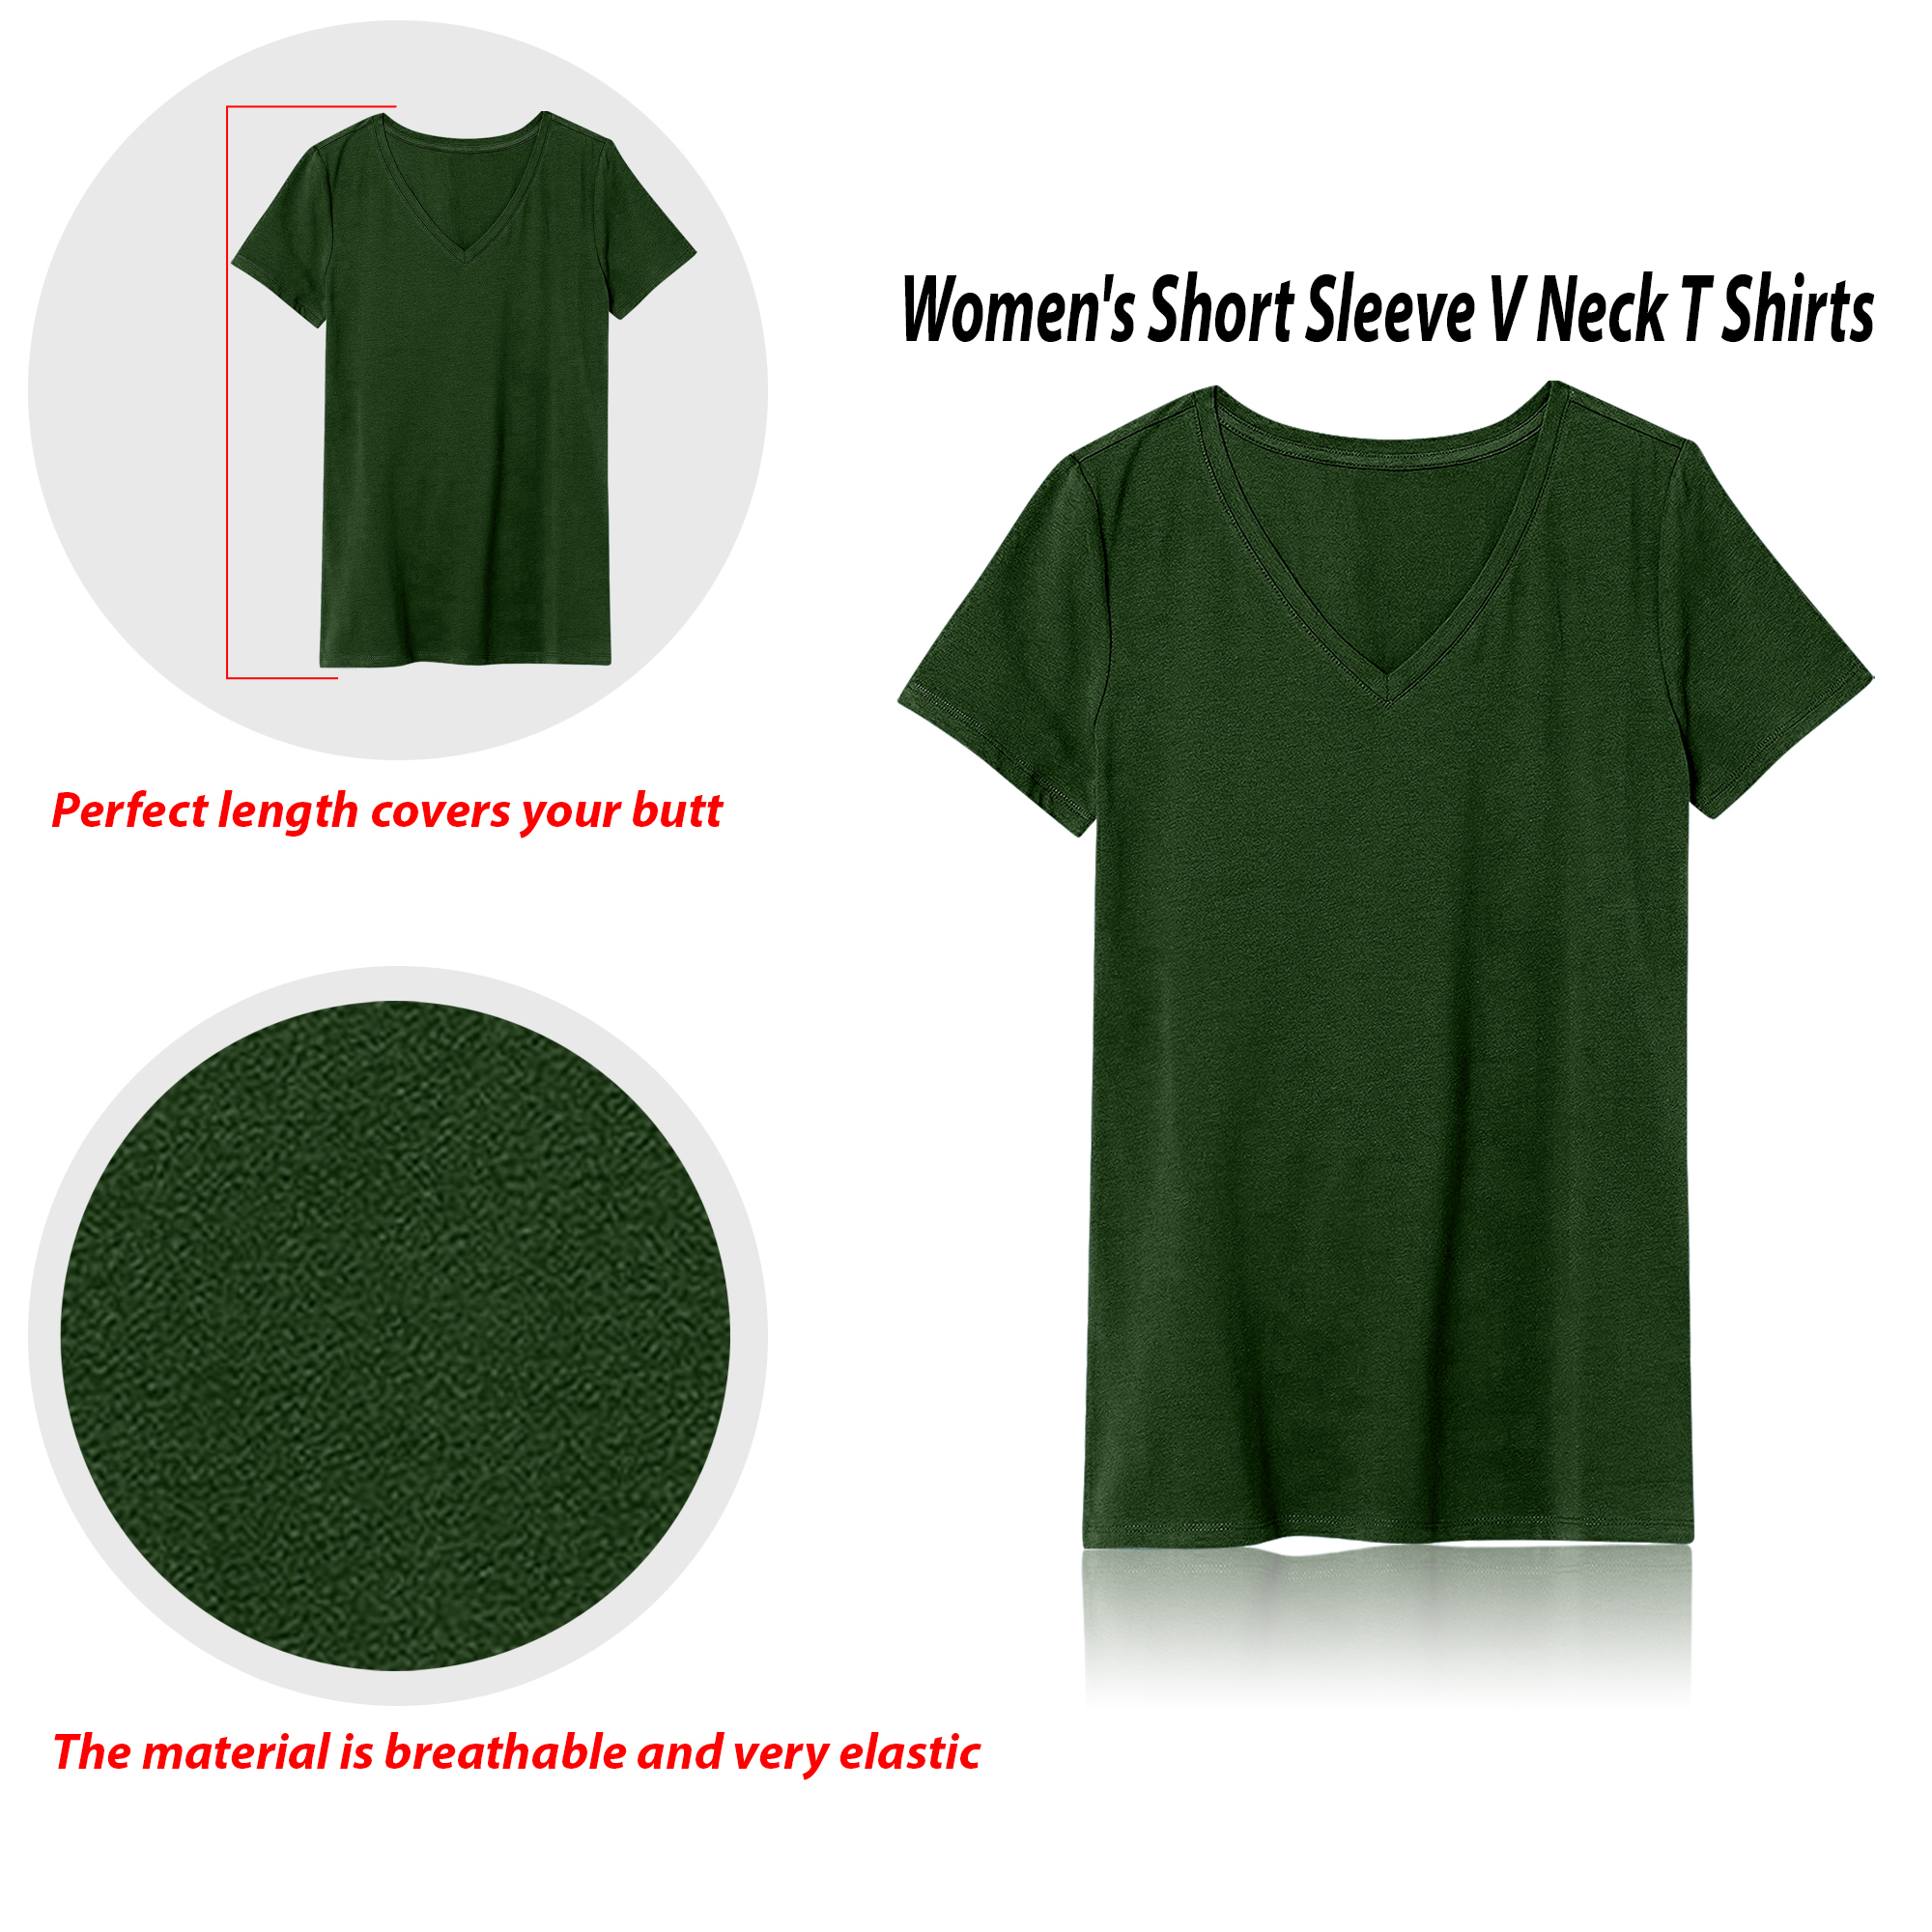 5-Pack: Ladies Ultra Soft Cotton Basic Short Sleeve V-Neck Short Sleeve Summer T-Shirts - Small